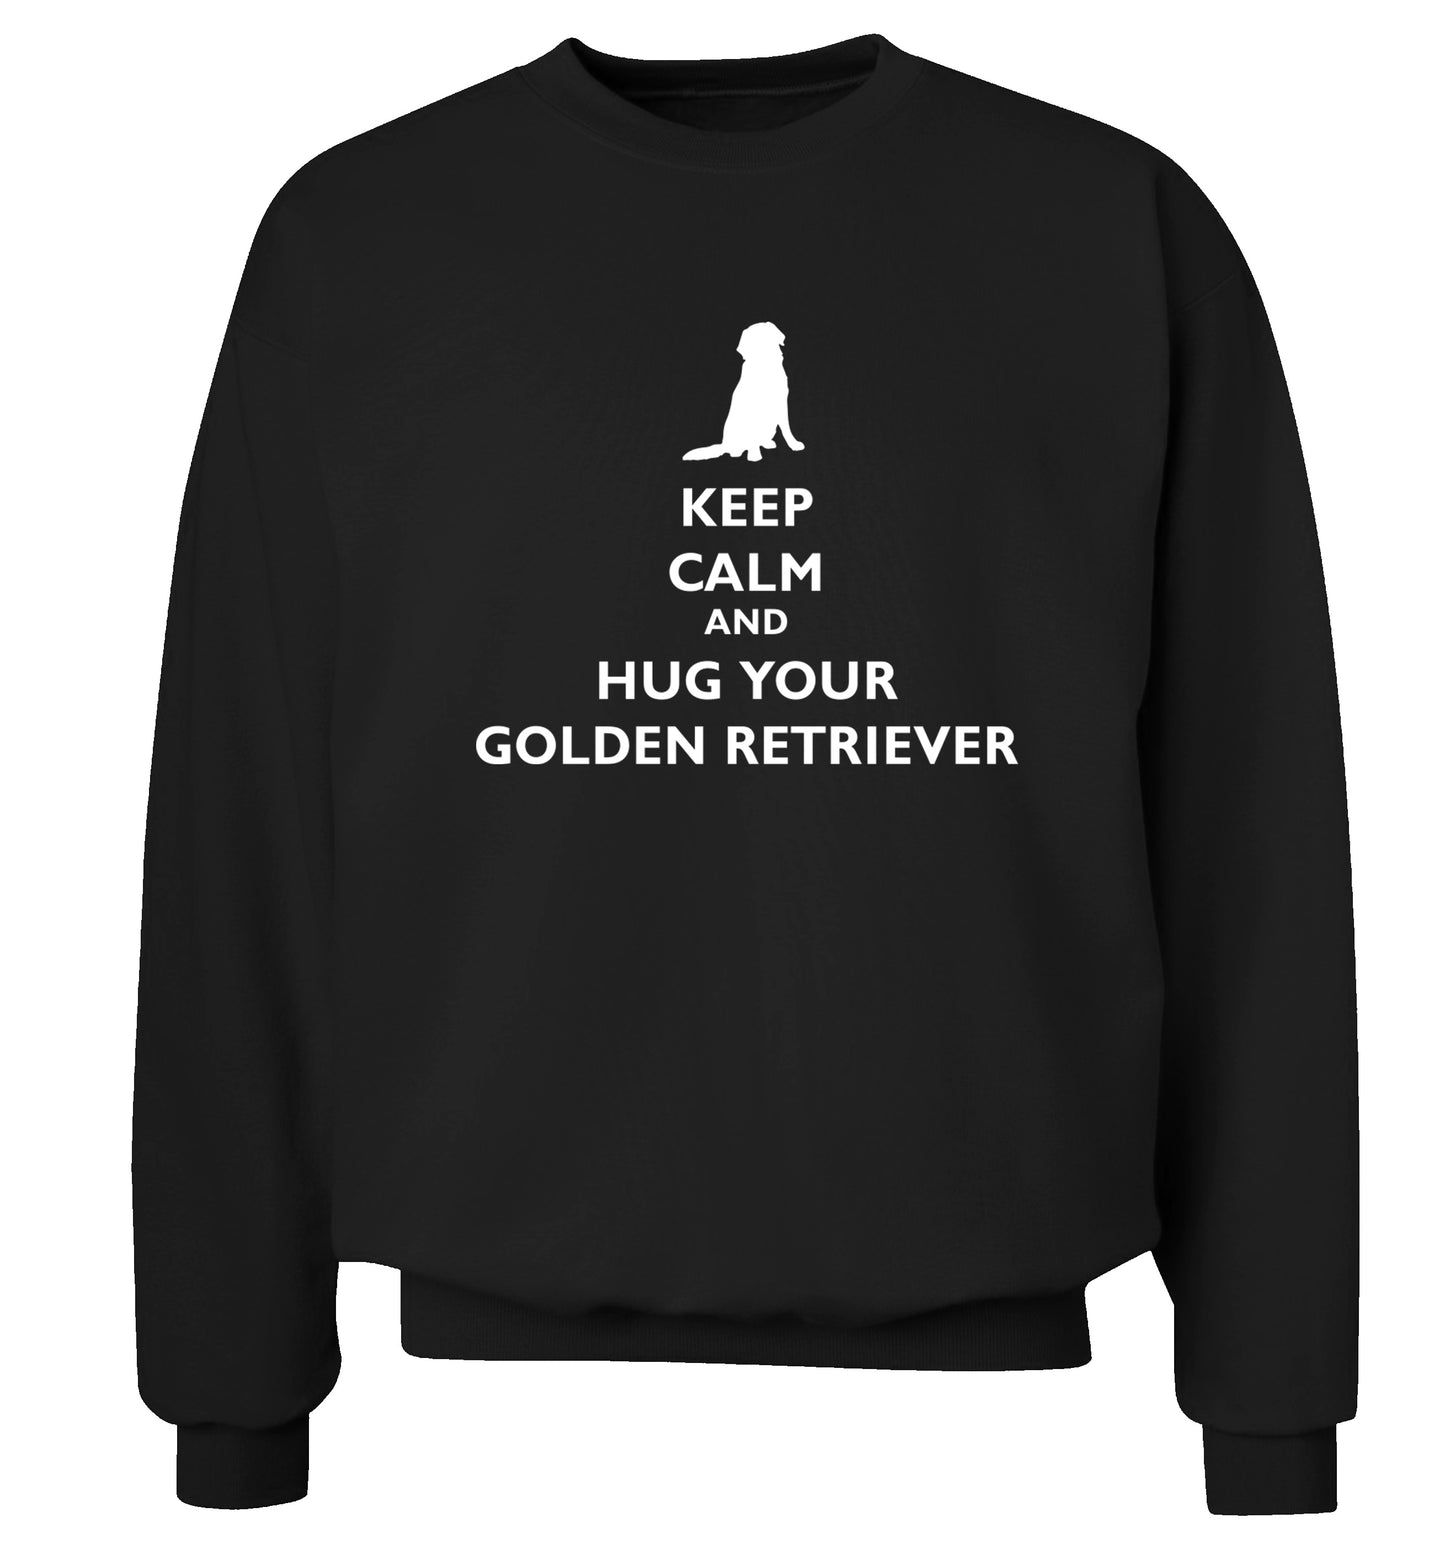 Keep calm and hug your golden retriever Adult's unisex black Sweater 2XL